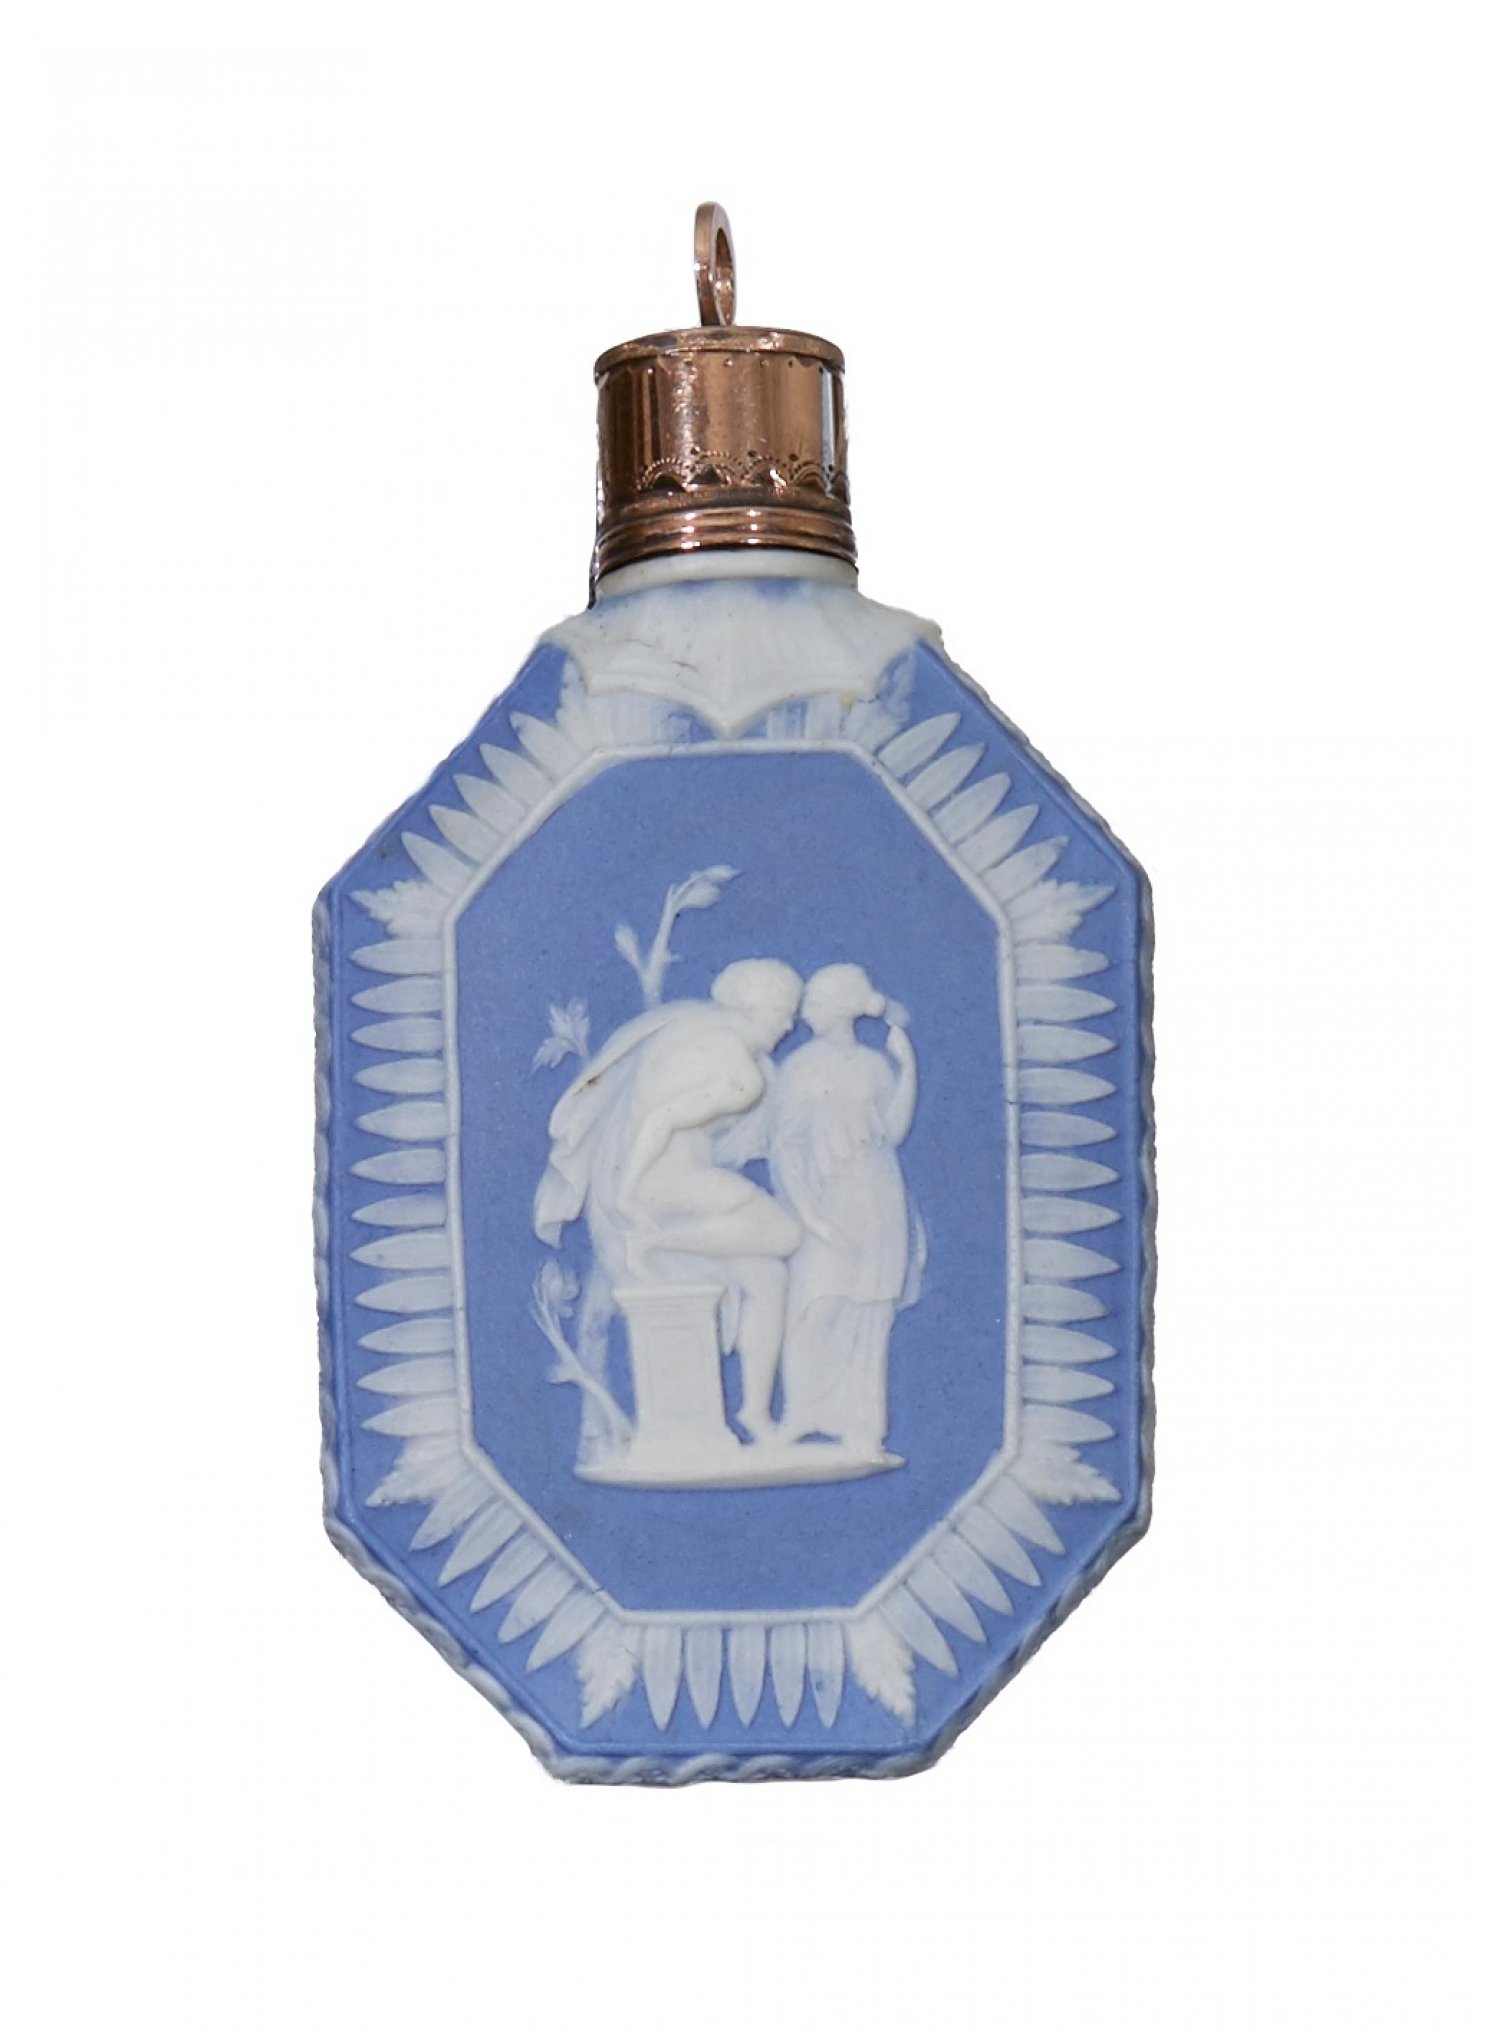 Wedgwood blue jasper scent bottle - octagonal